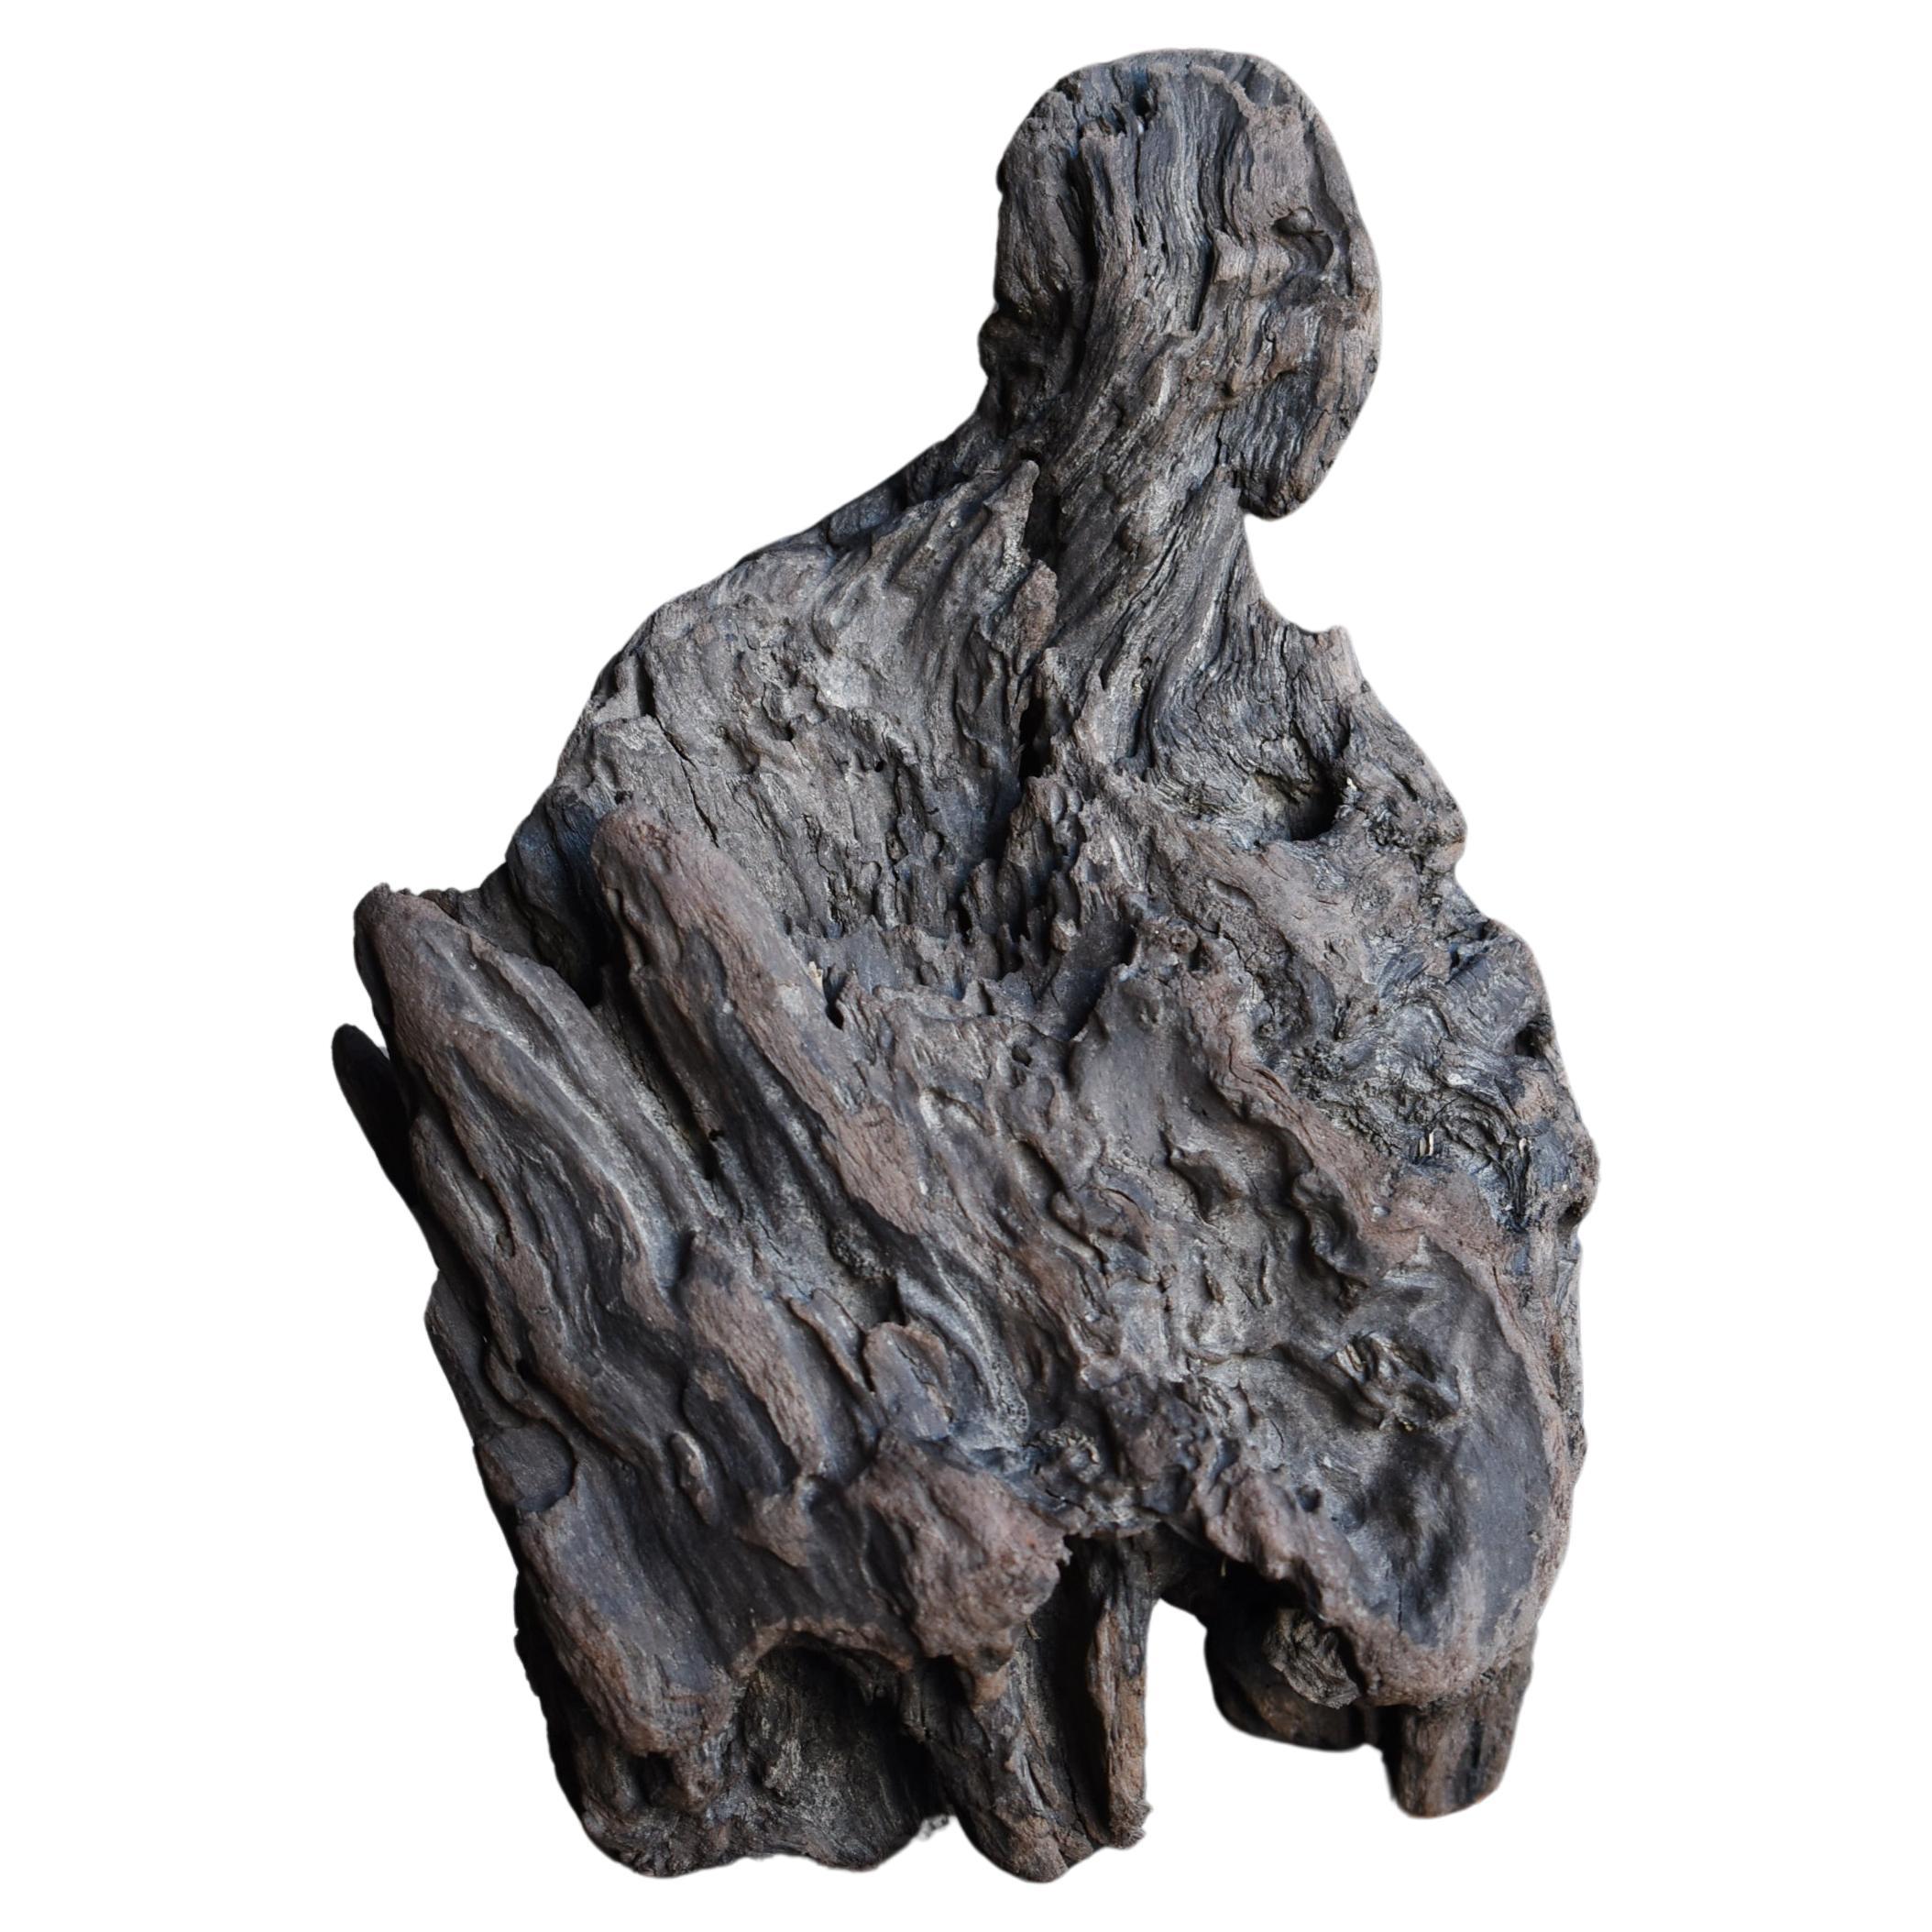 Japanese Old Wooden Humanoid Figurine / Wabisabi Sculpture Object 